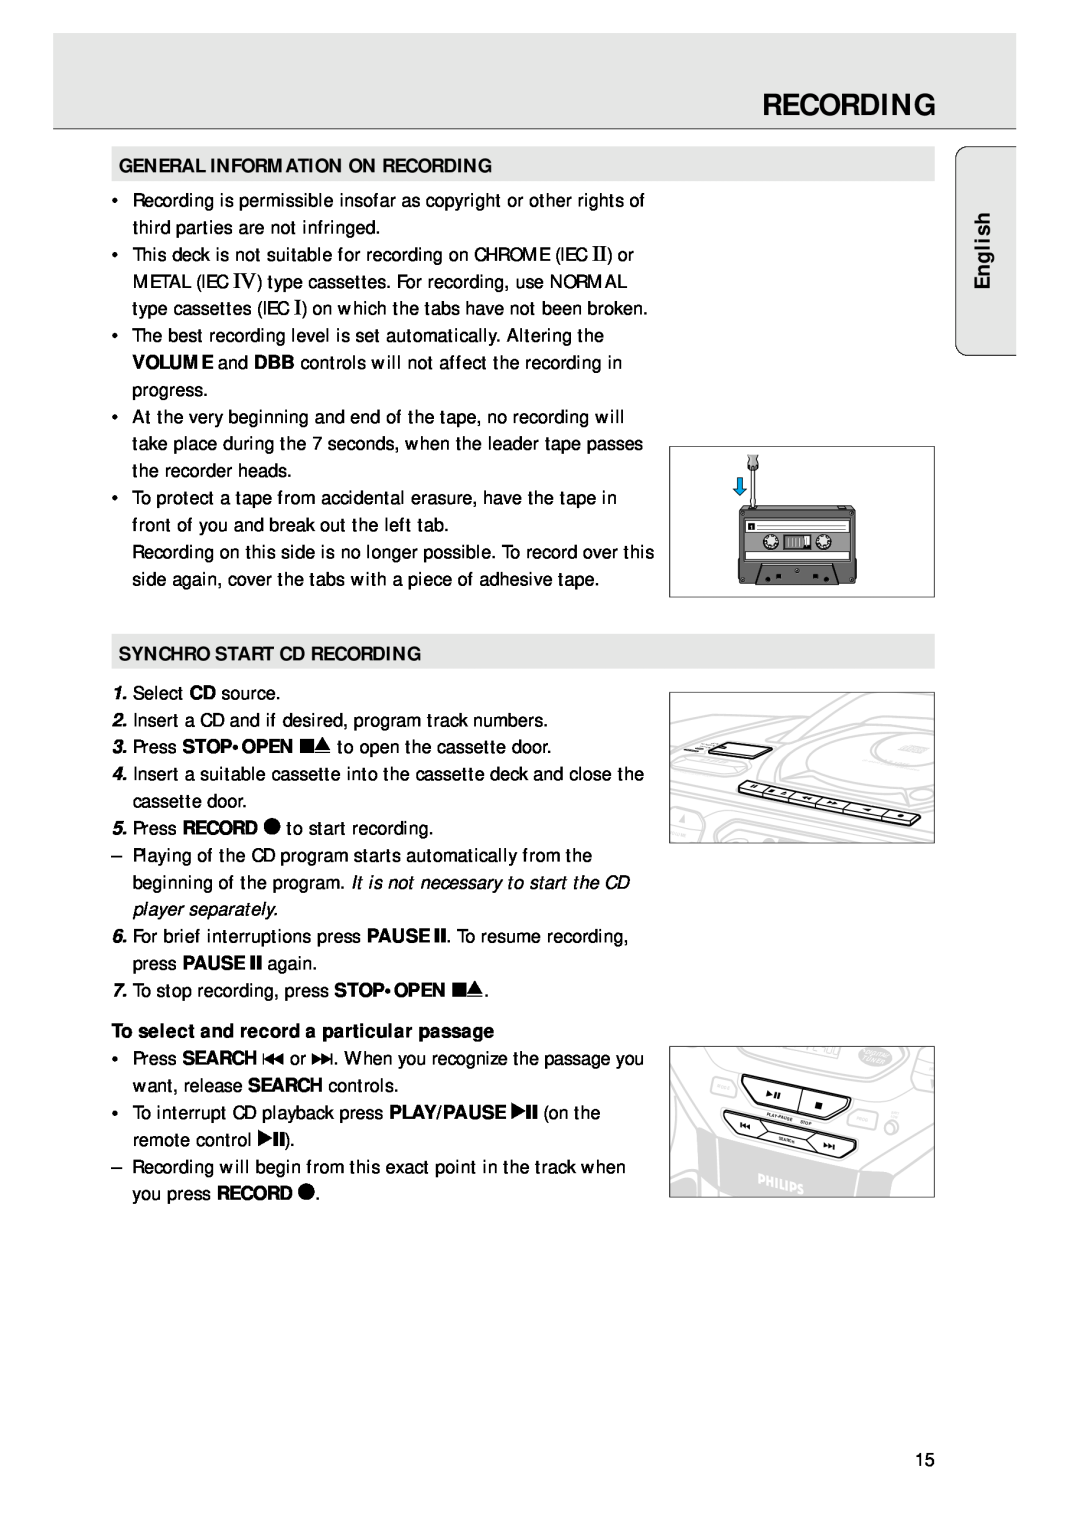 Magnavox AZ 1045 manual English, General Information On Recording, Synchro Start Cd Recording 